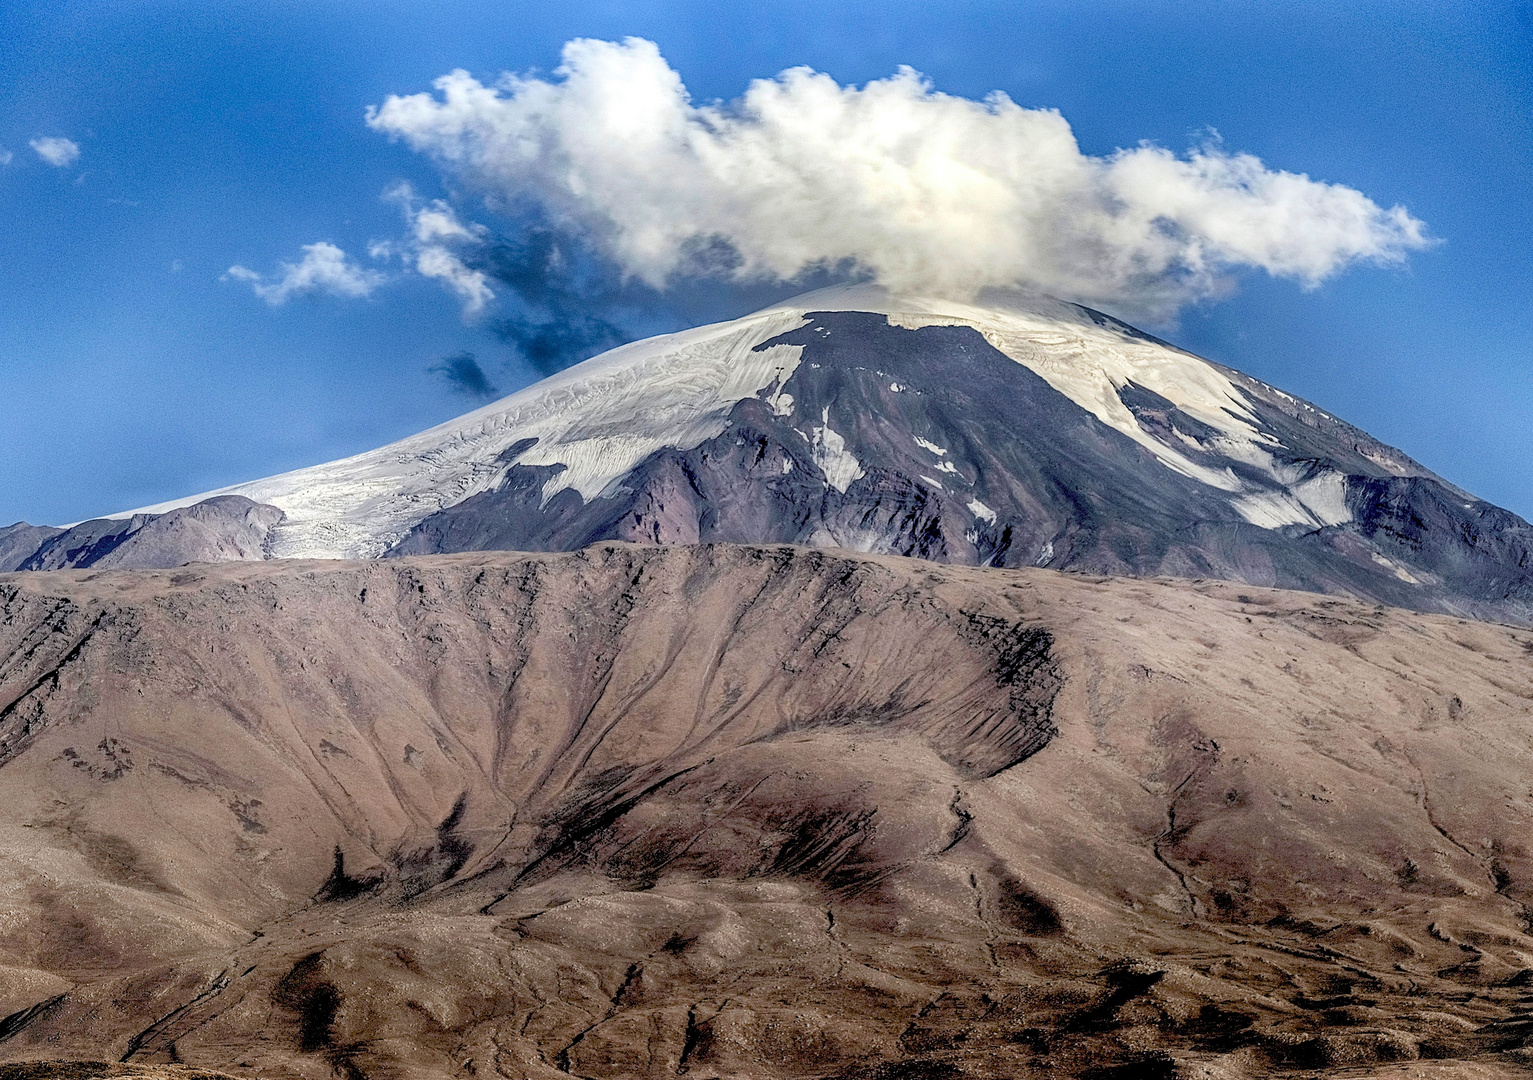 Biblical mountain Ararat